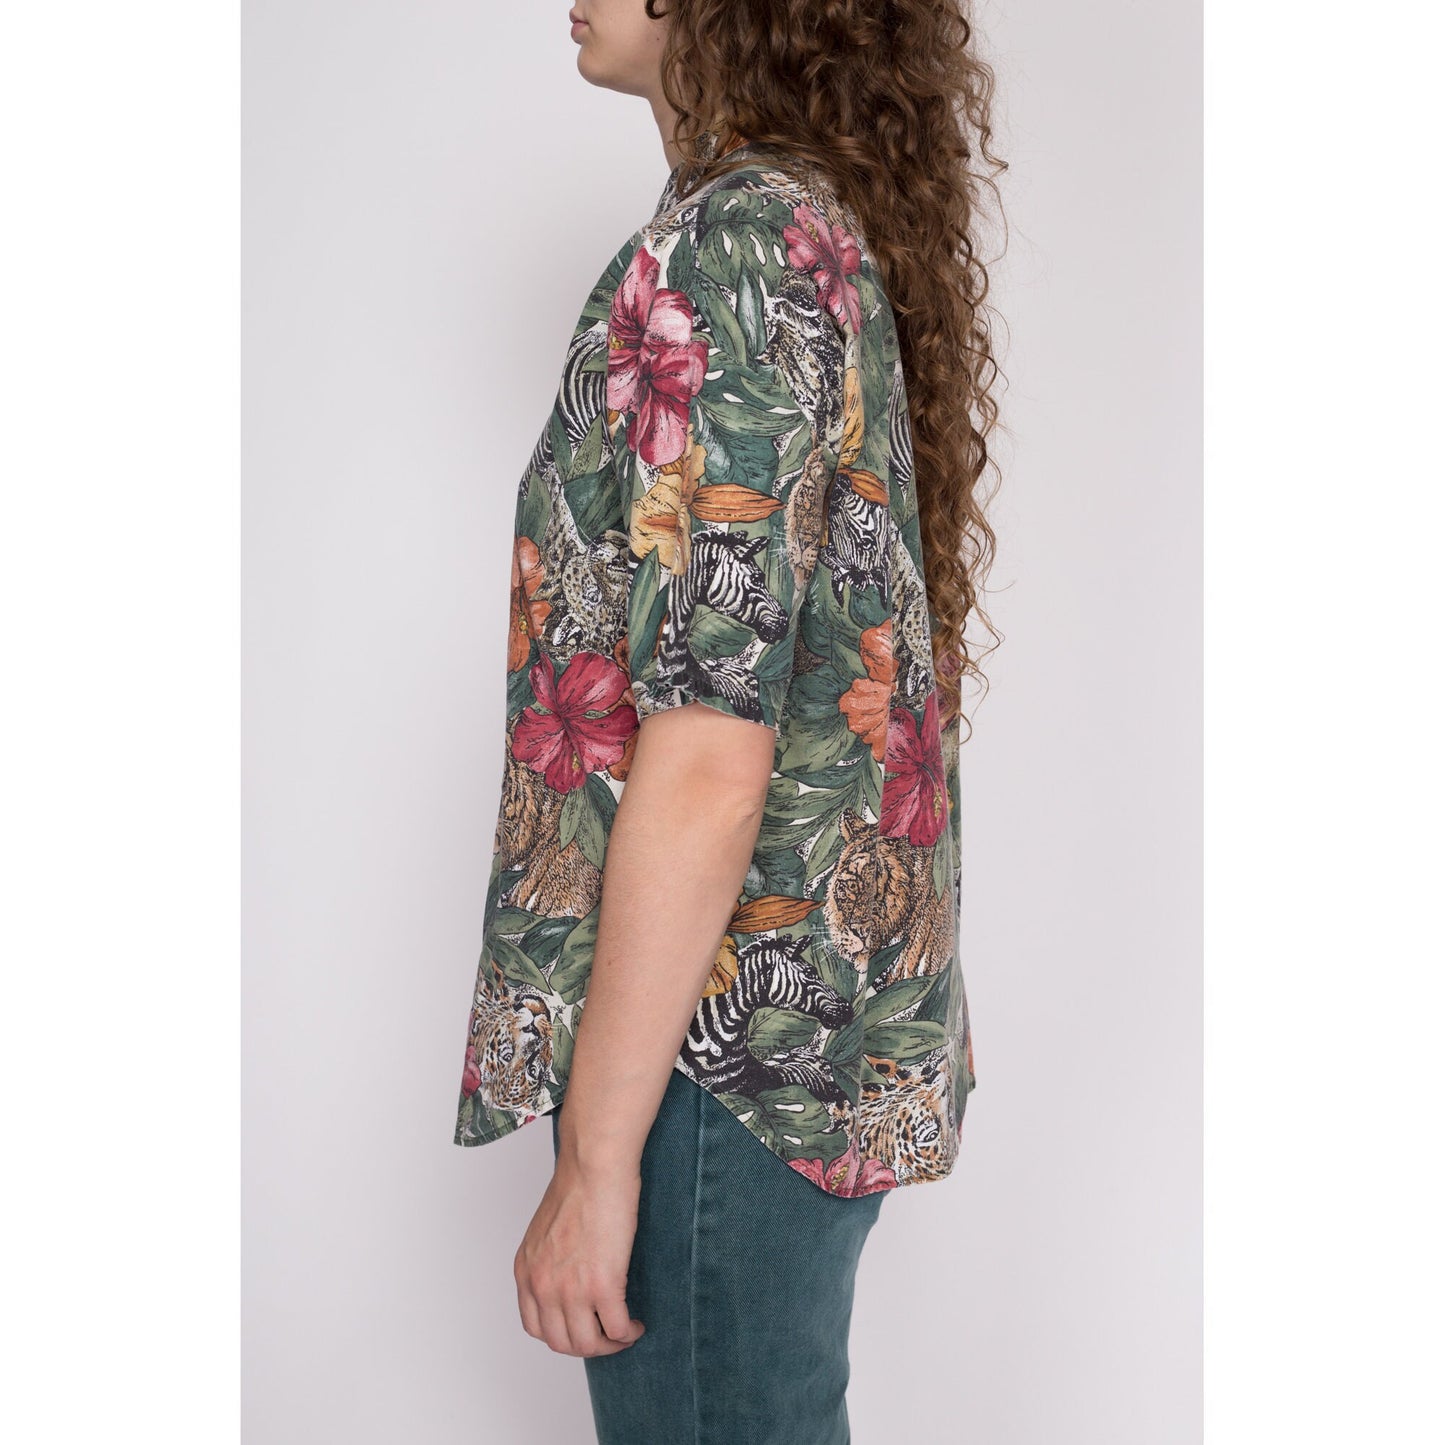 M| 90s African Animal Tropical Floral Shirt - Medium | Vintage Button Up Short Sleeve Collared Safari Print Top